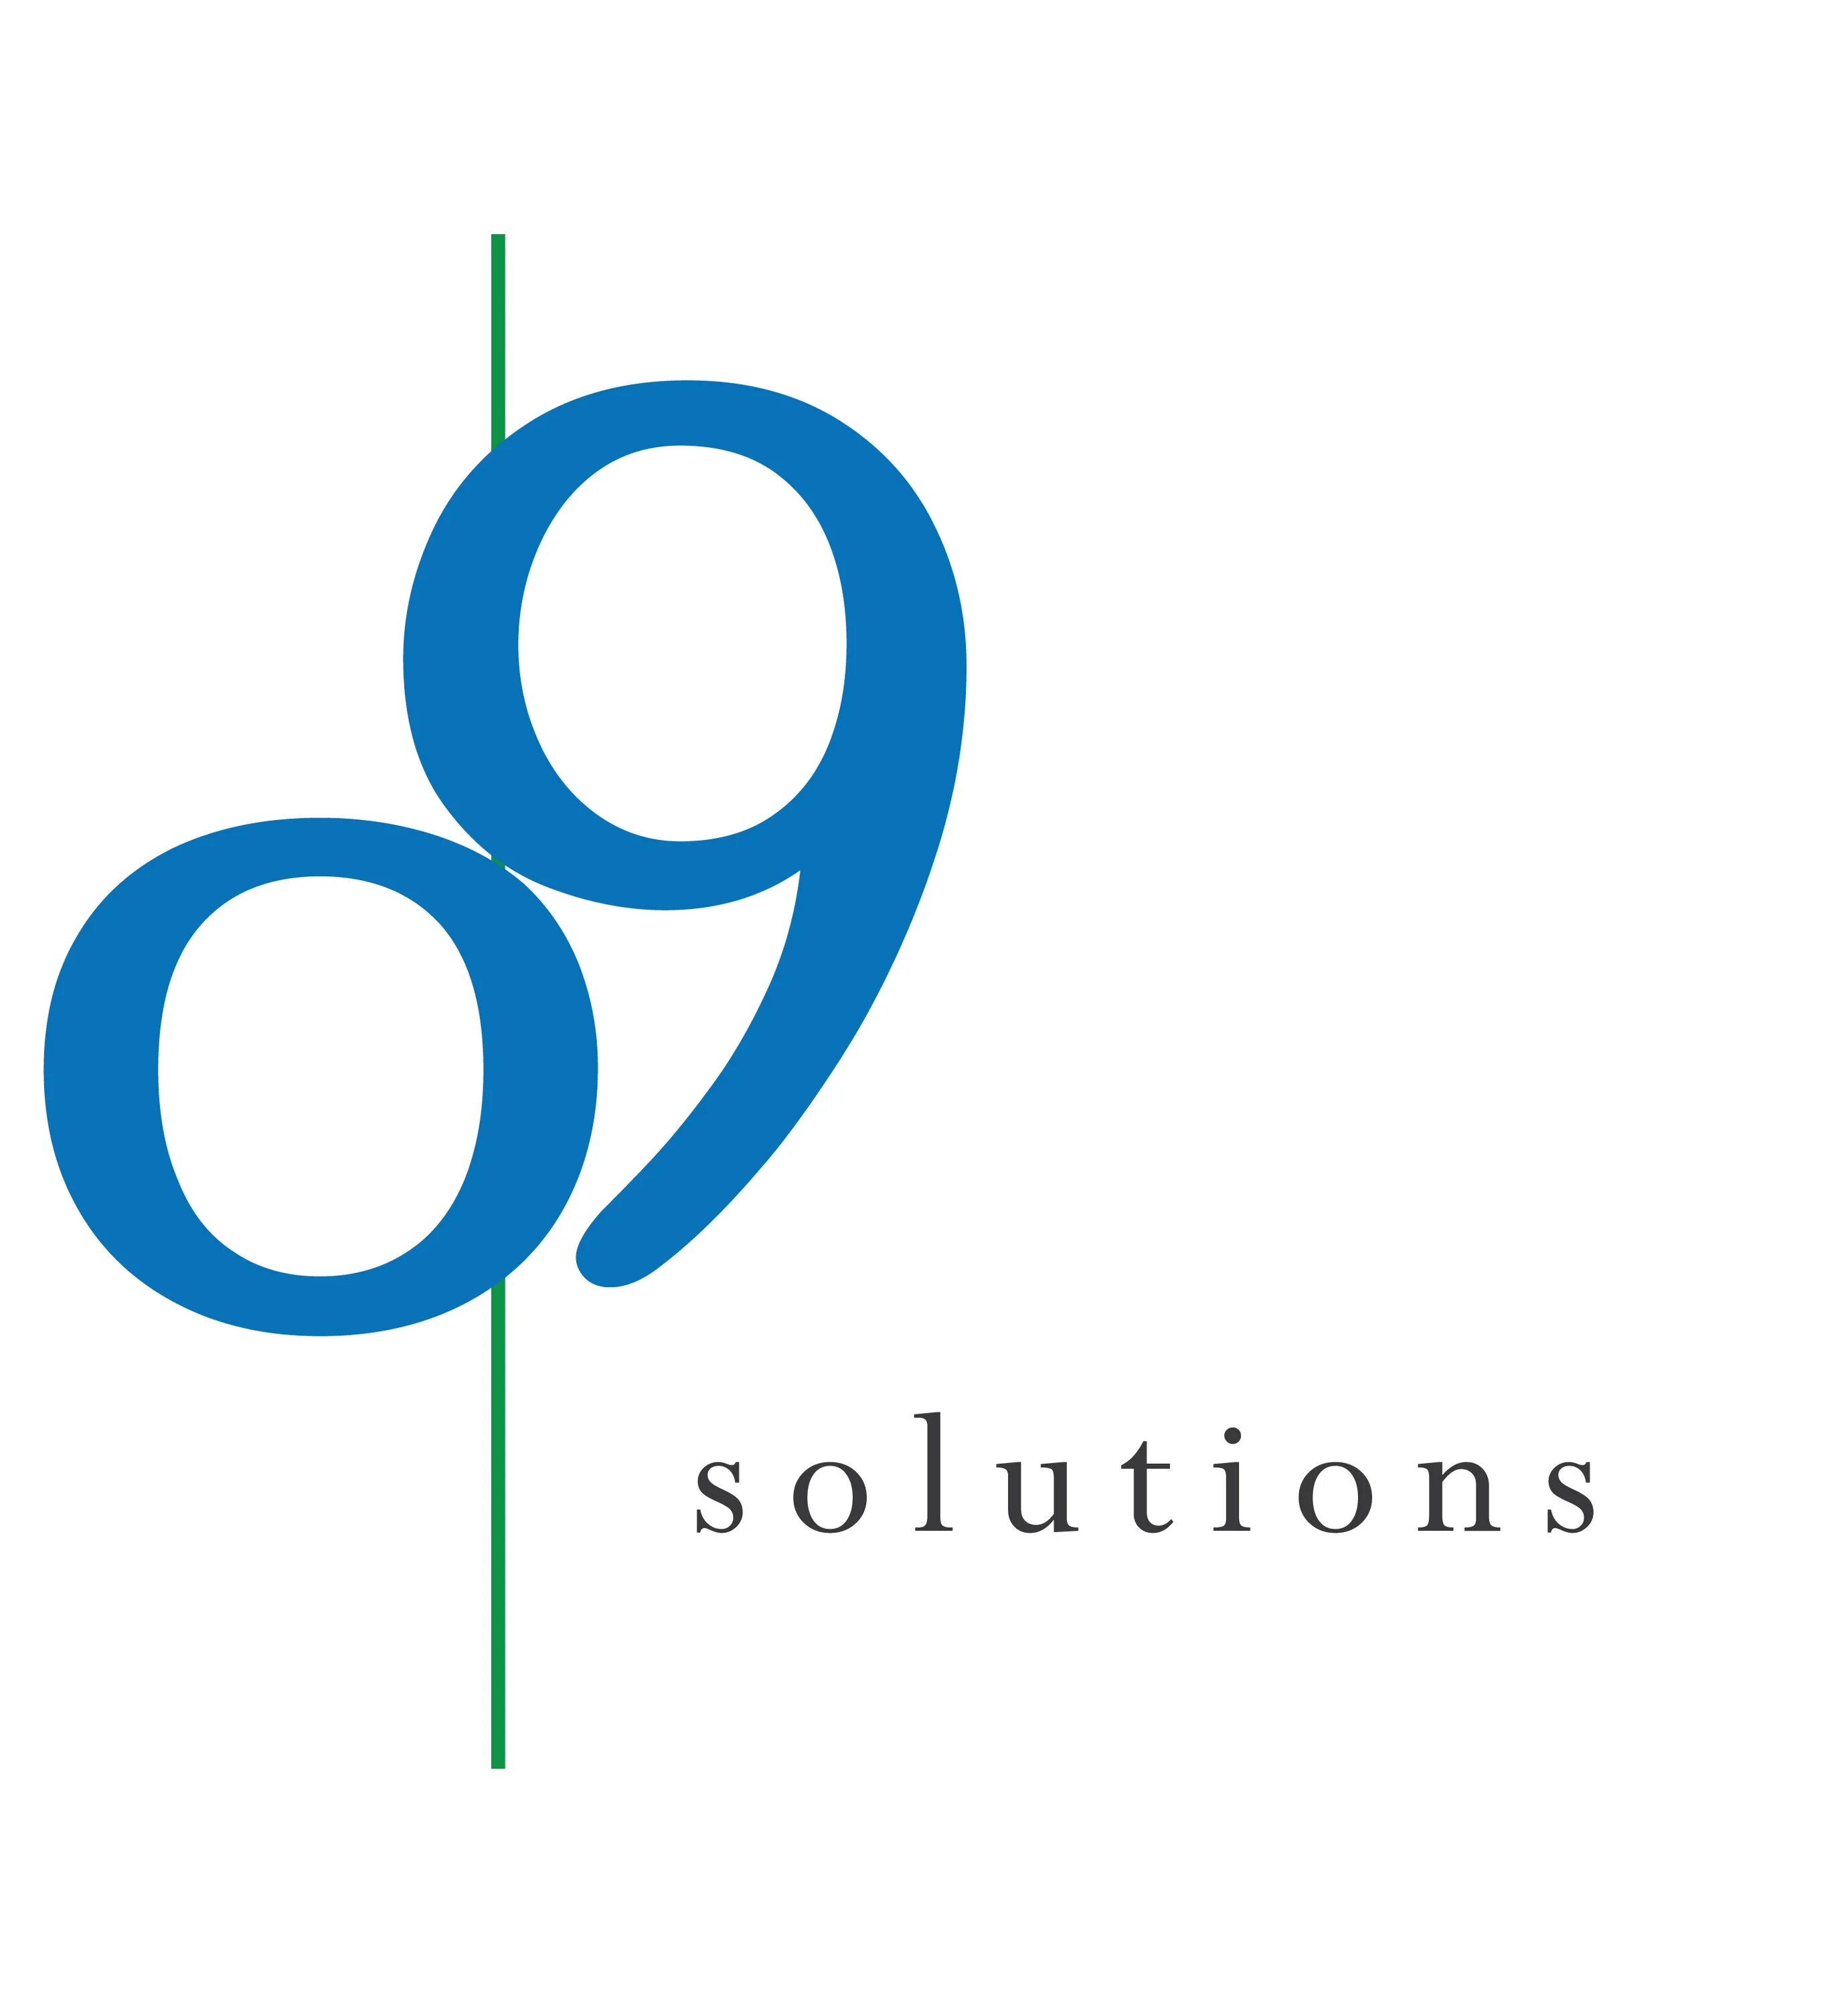 O9. O9 solutions логотип PNG. O9 solutions,Inc Страна производитель. Solution 9.